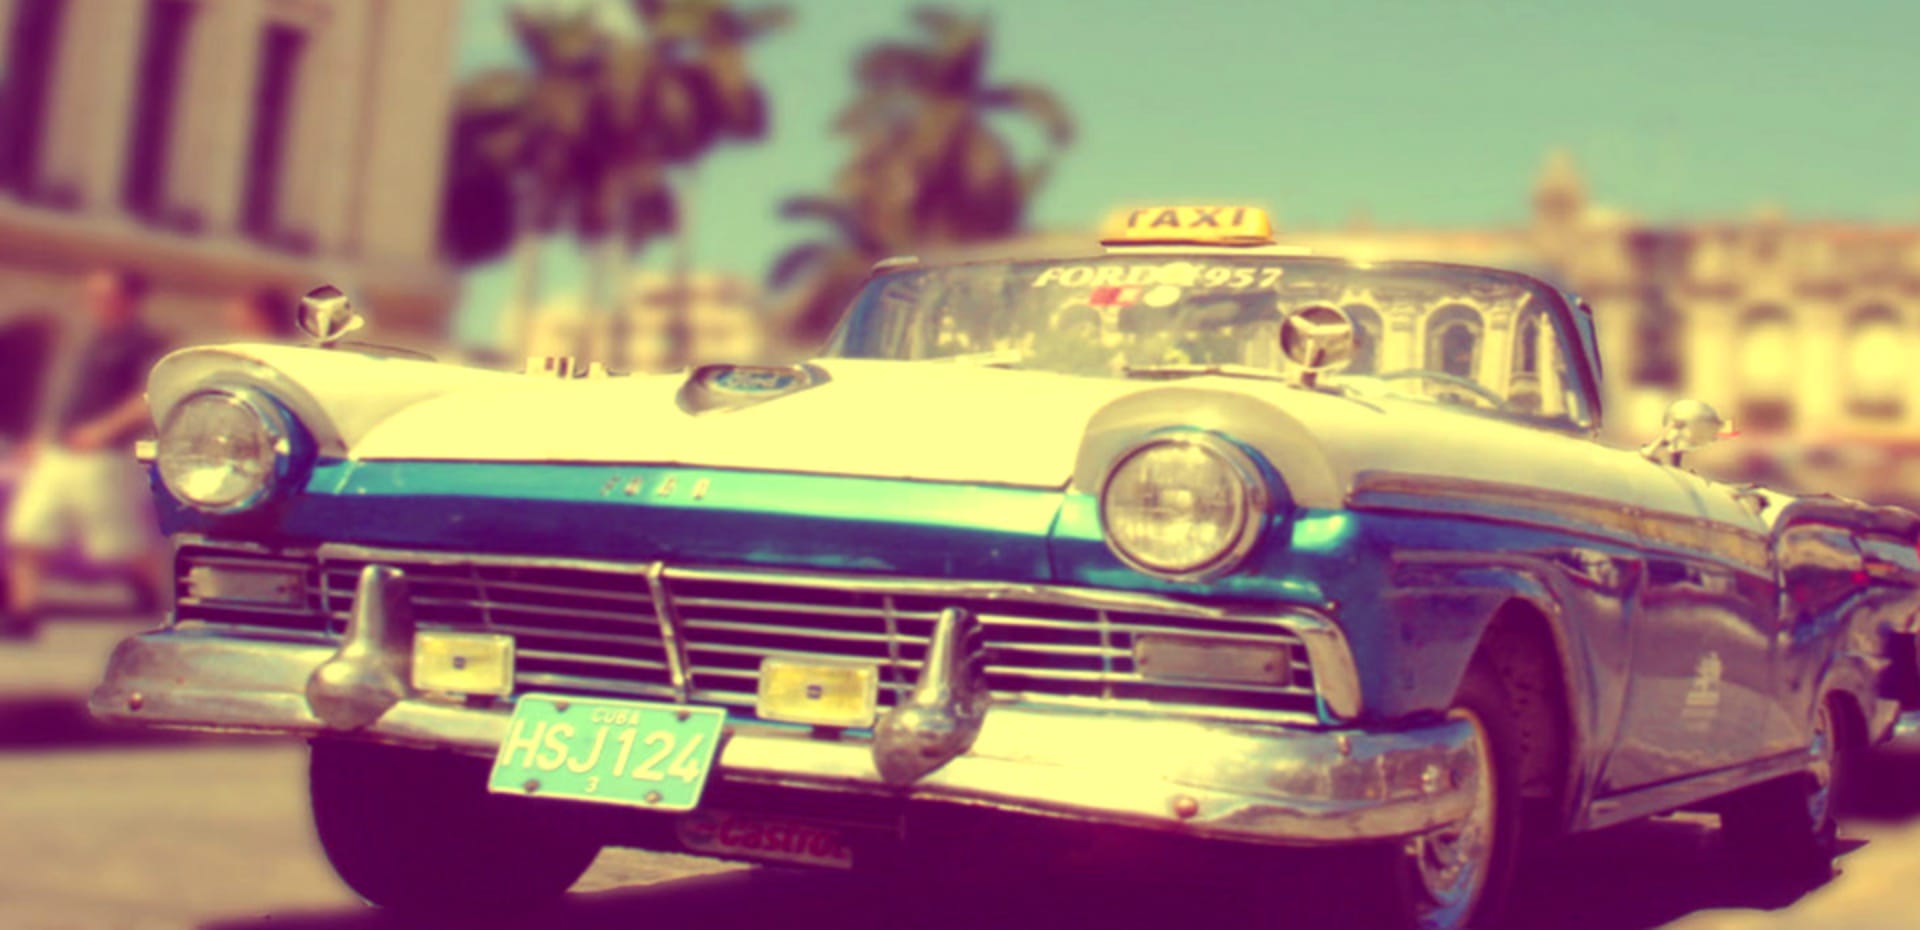 Kubánské taxi